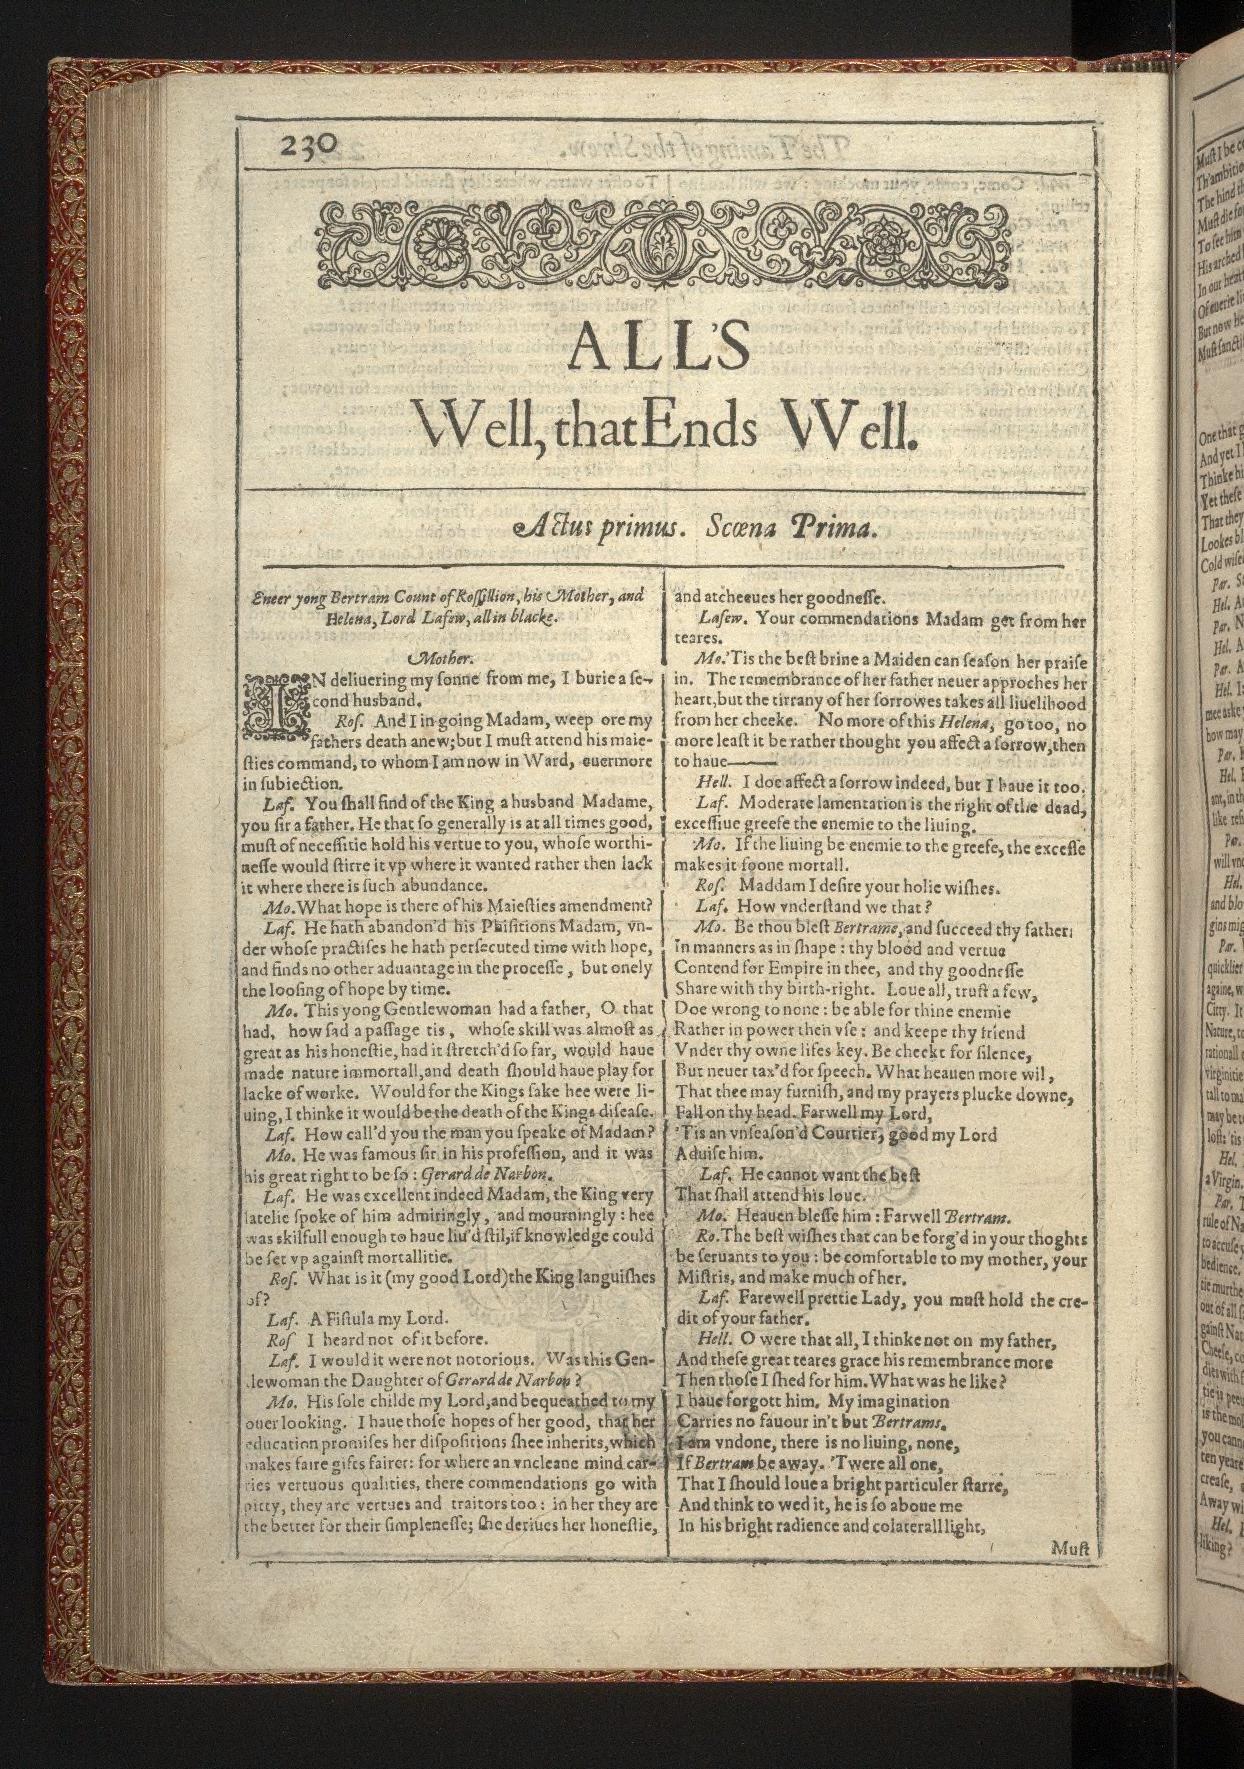 Shakespeare 400th anniversary marked with 'Wonder Season'